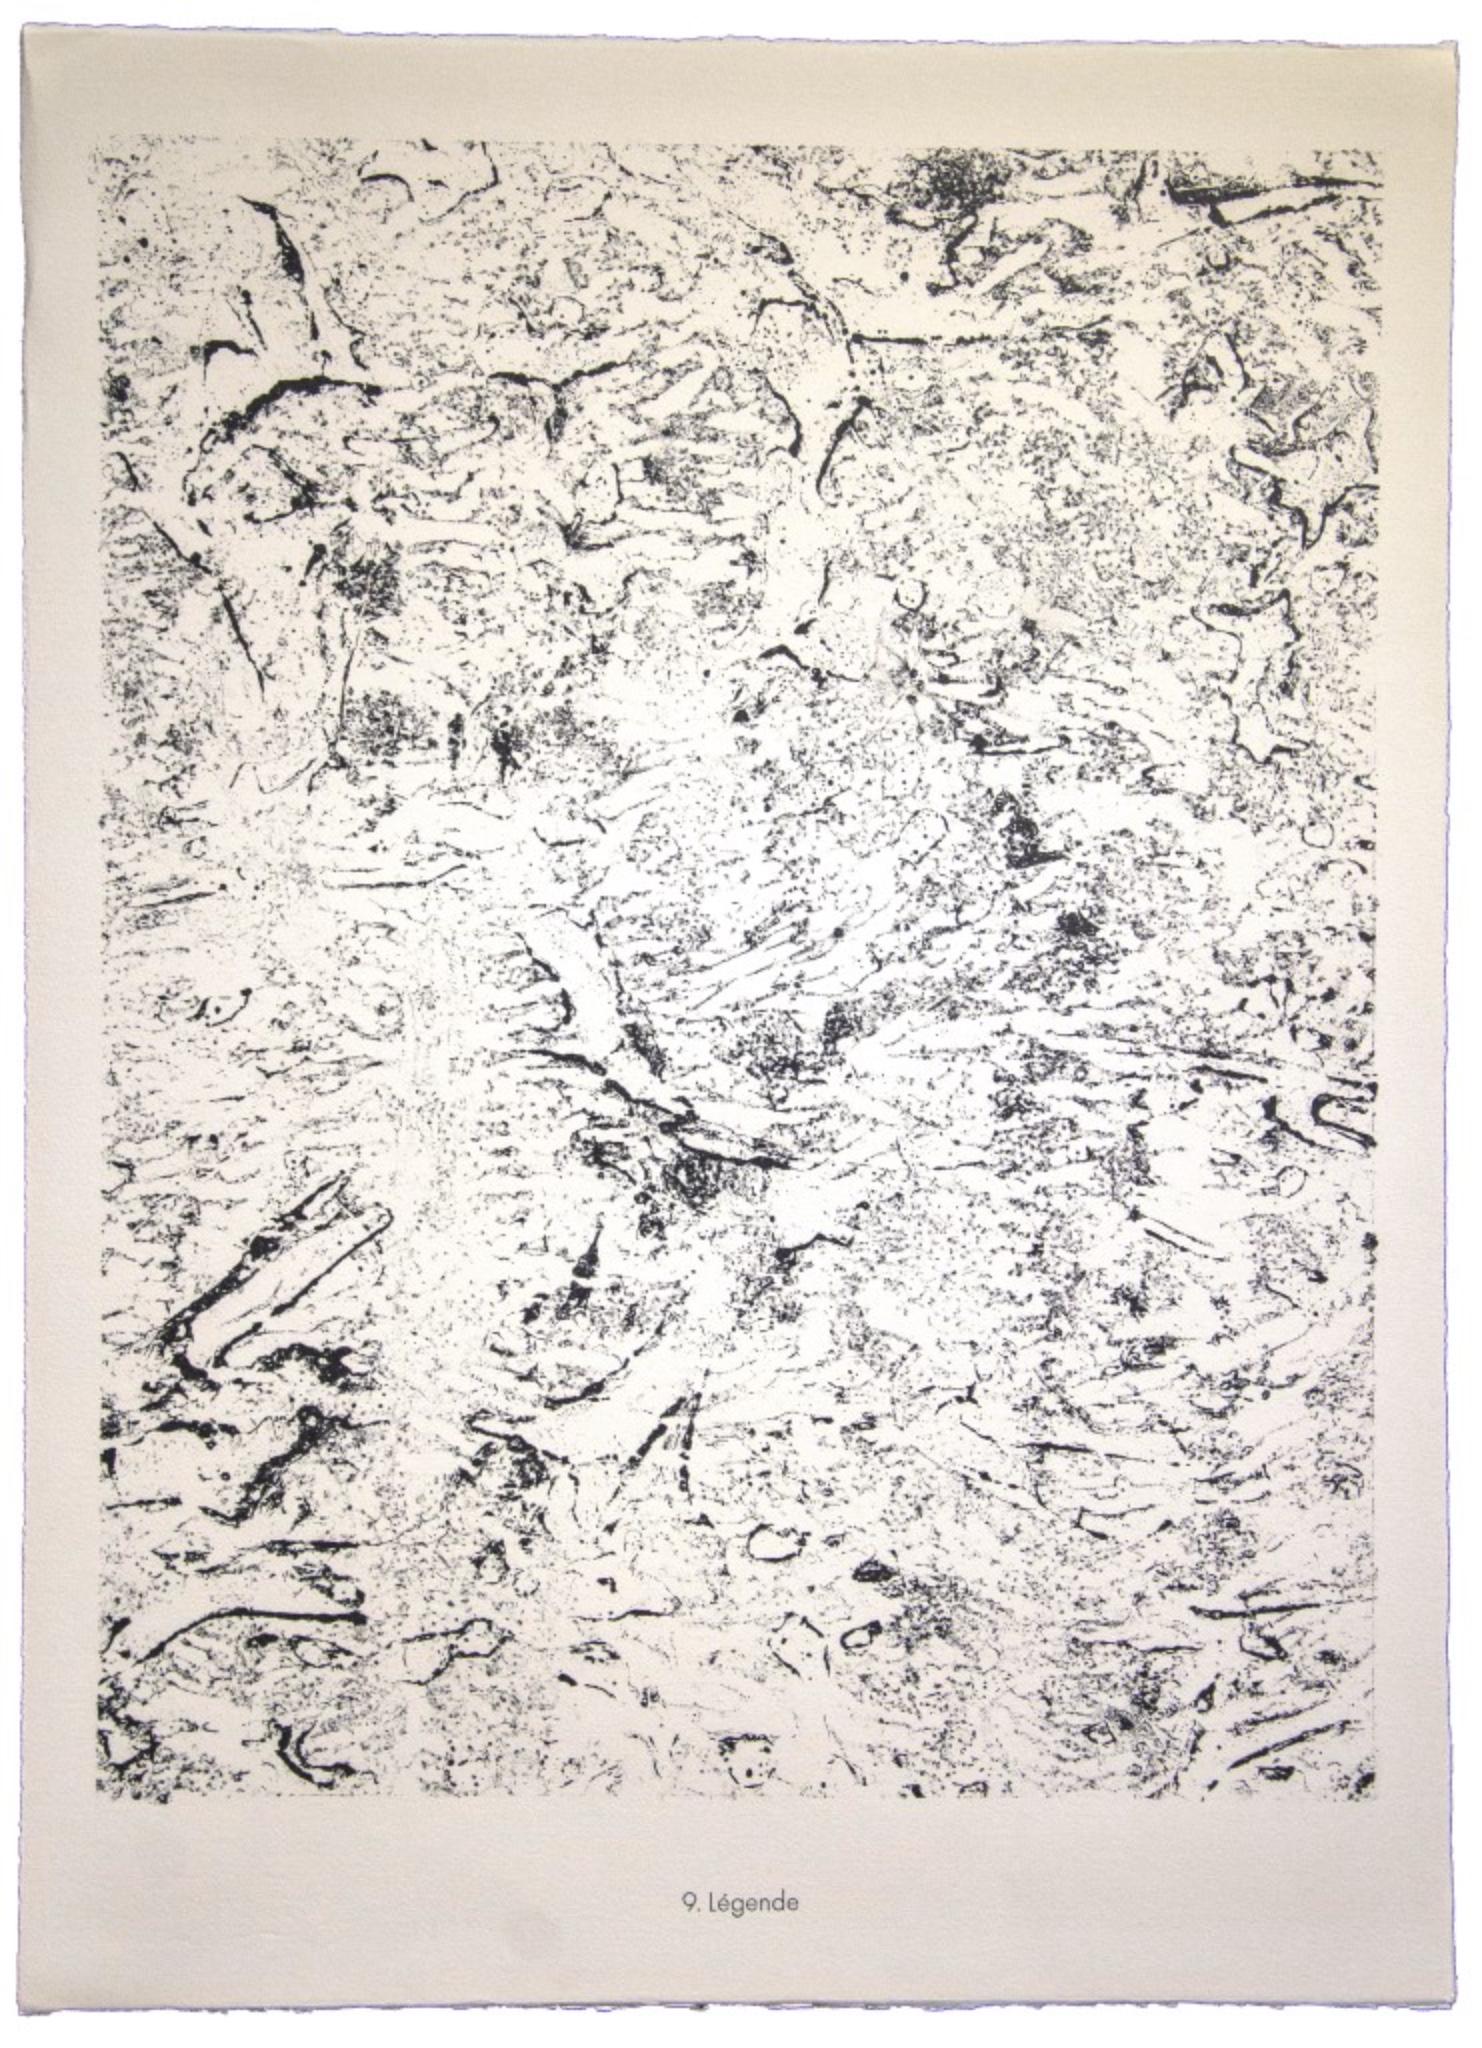 Legende - Original Lithograph by Jean Dubuffet - 1959